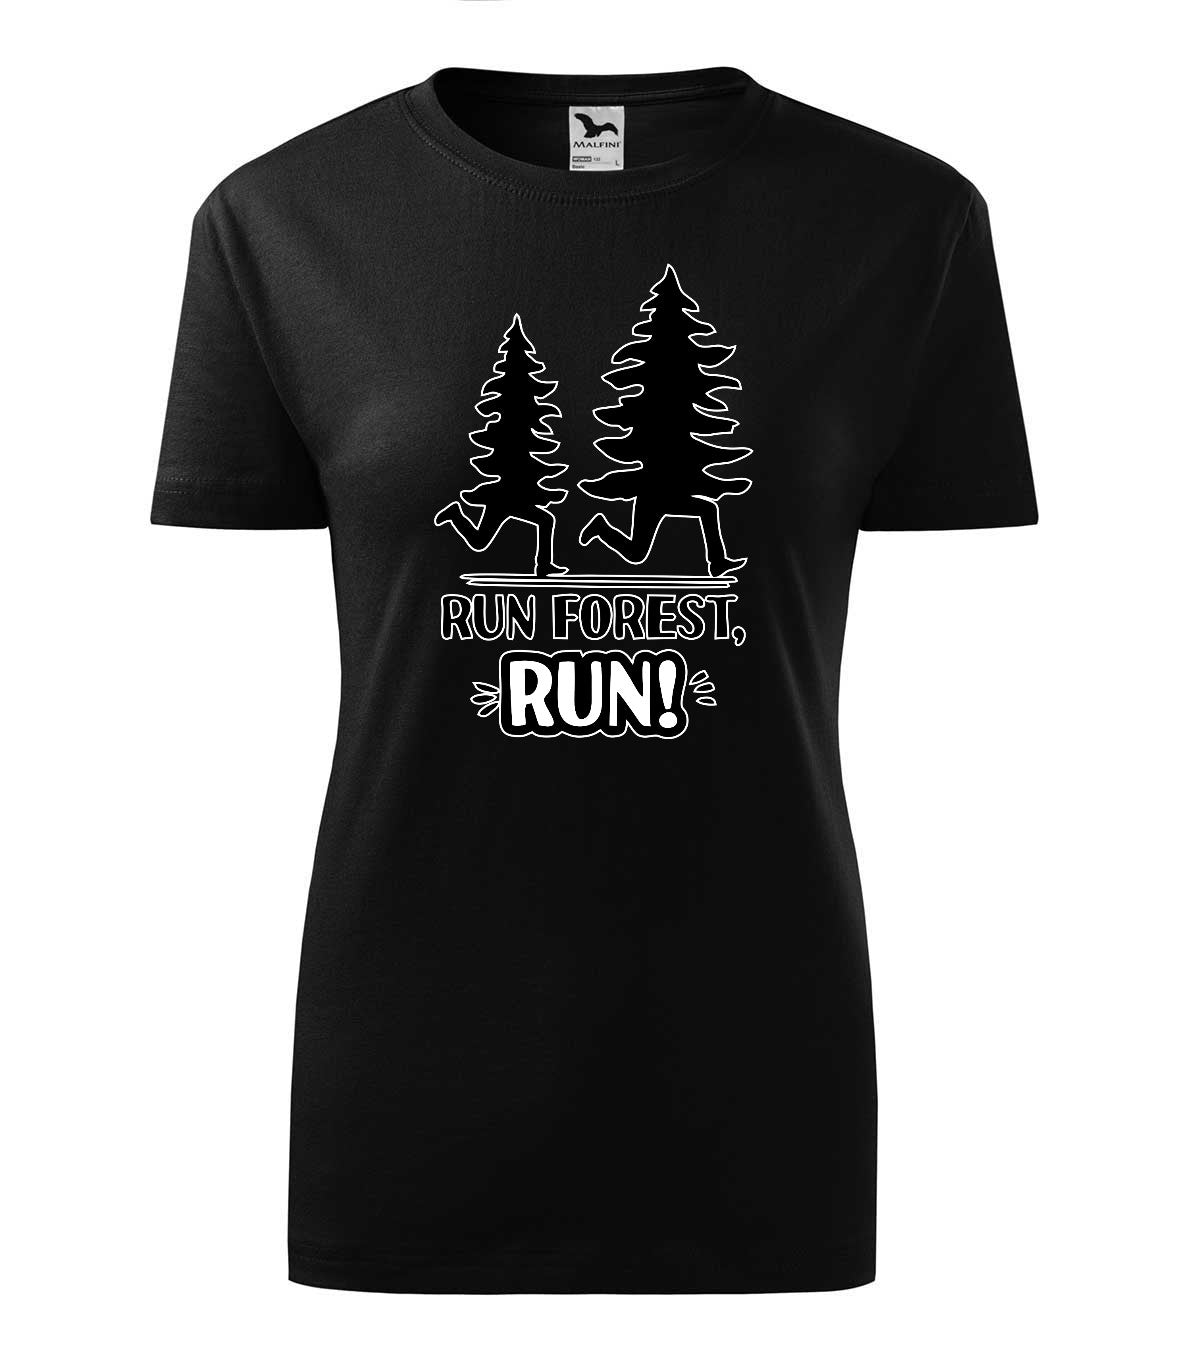 Run Forest, run! női technikai póló